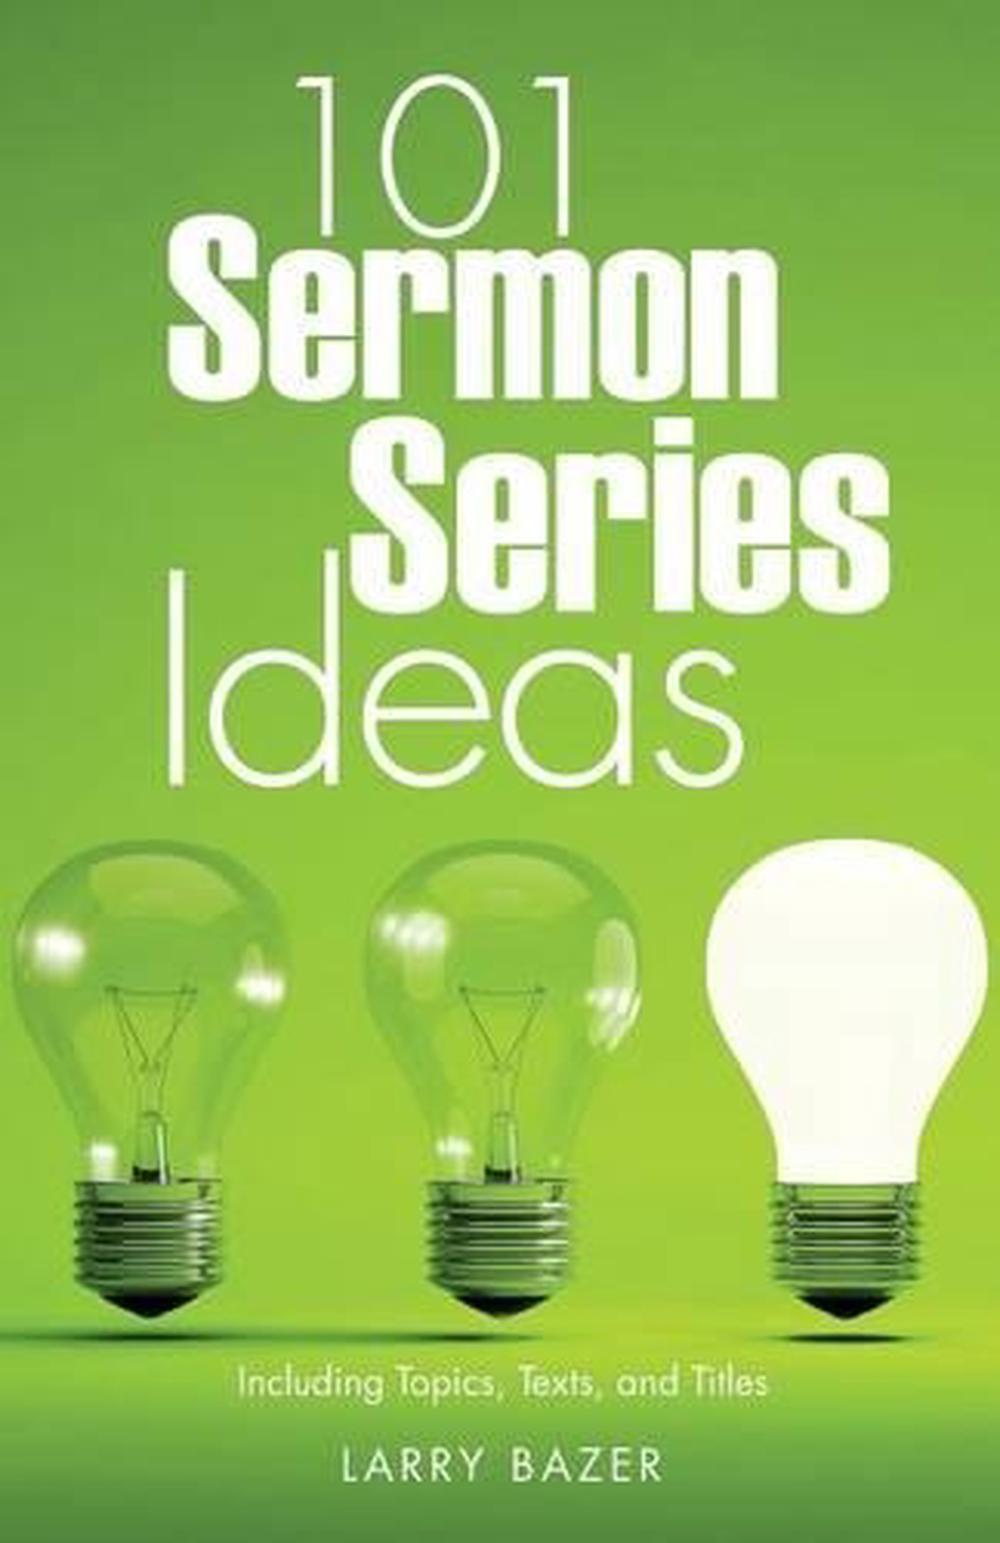 101 Sermon Series Ideas by Larry Bazer (English) Paperback Book Free